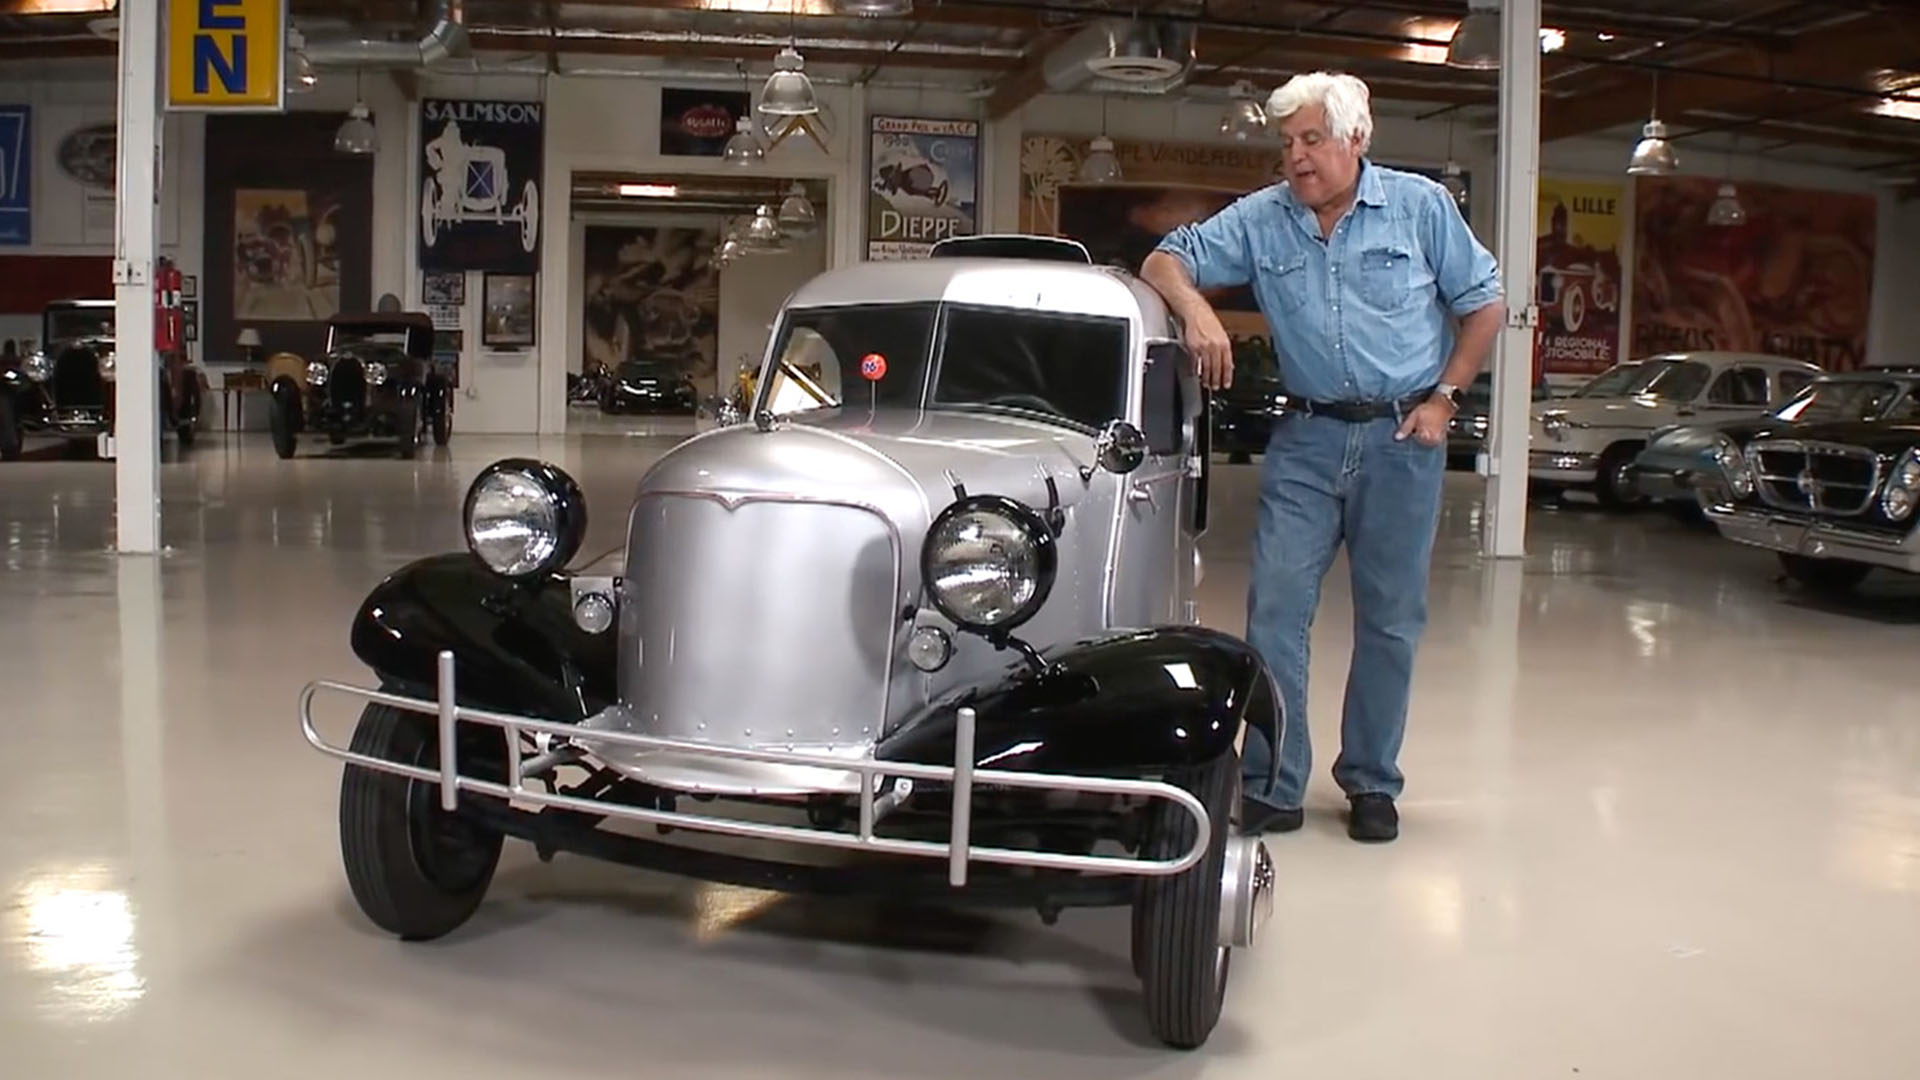 Jay Leno's Garage Best-Selling Car Care Essential Detailing Kit